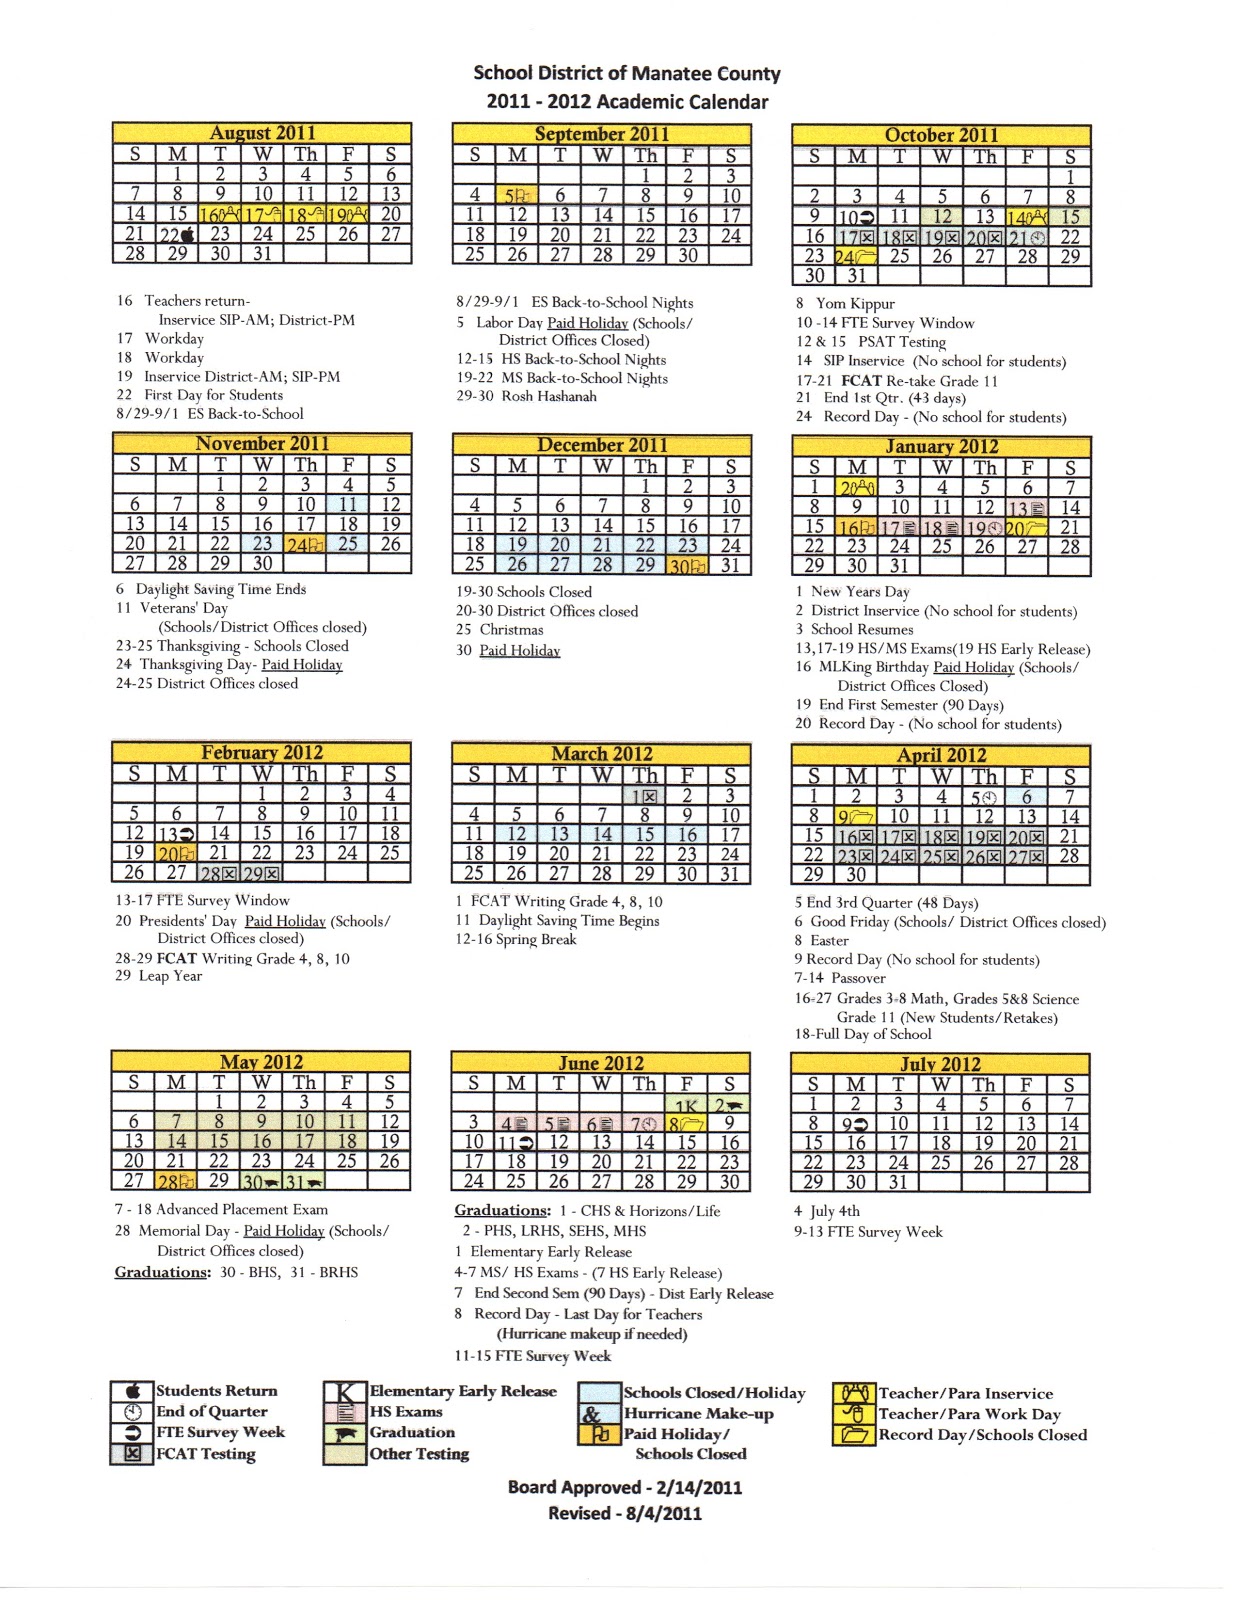 real-estate-in-manatee-and-sarasota-county-florida-manatee-county-s-academic-calendar